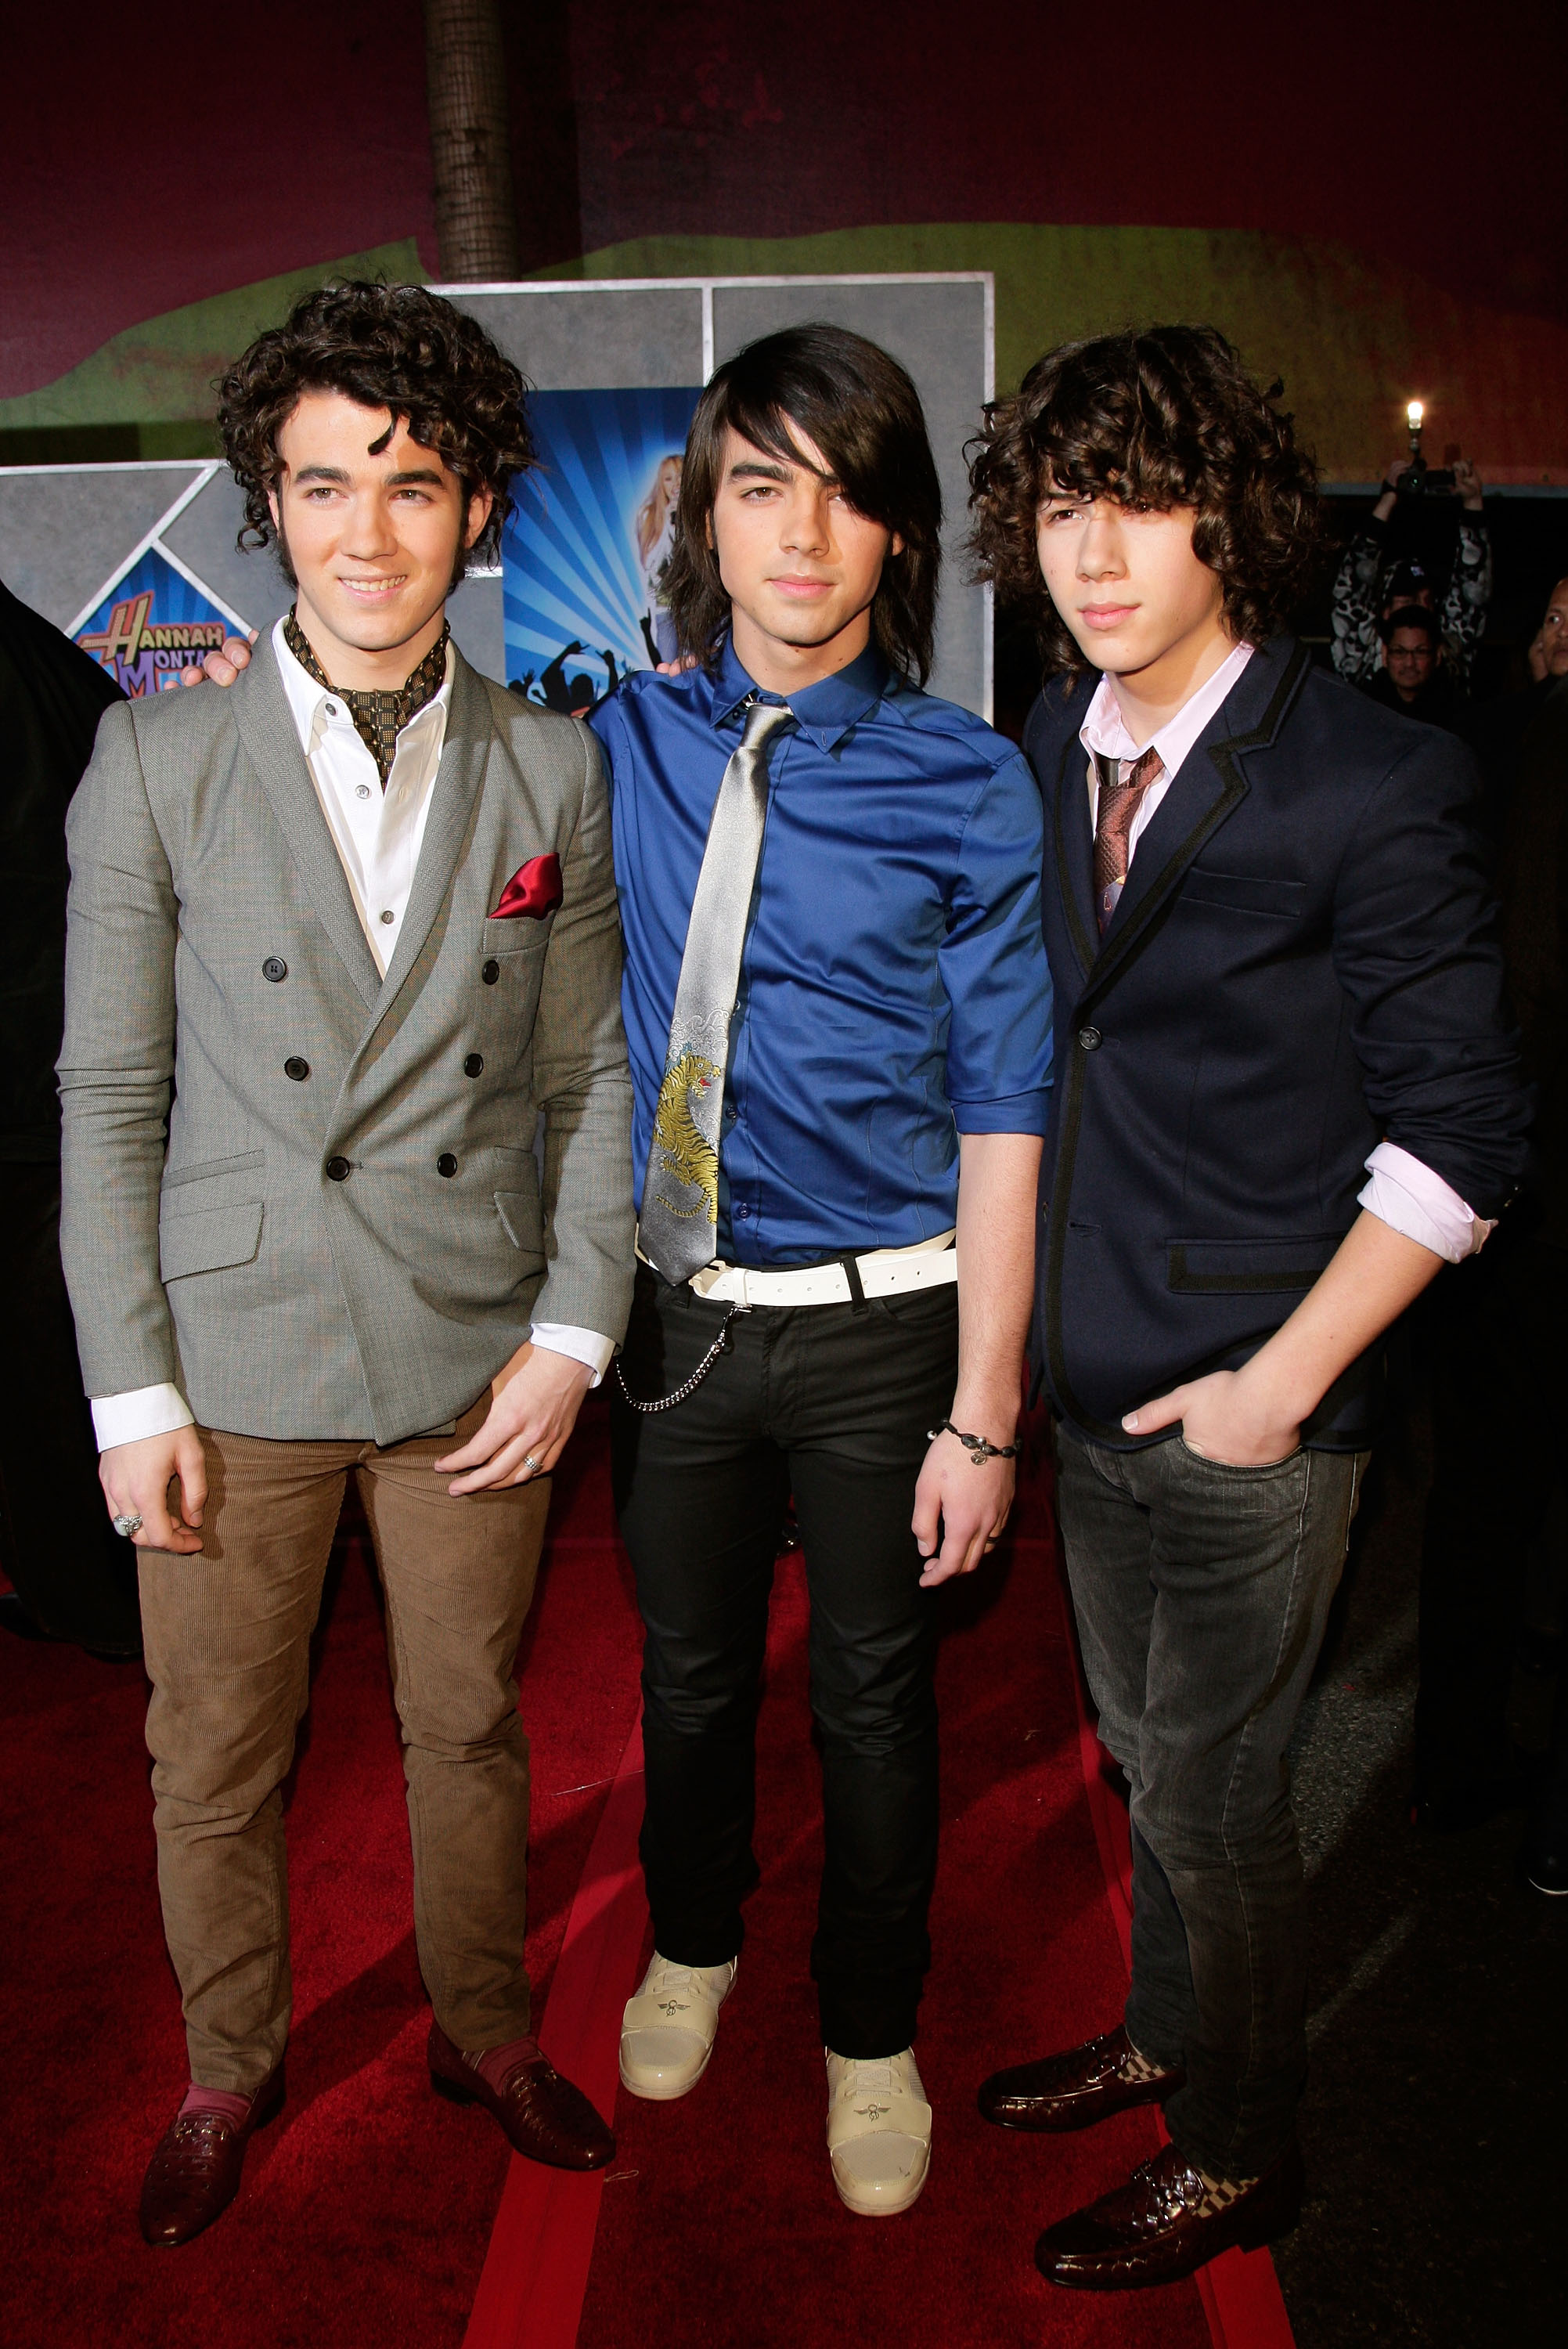 Jonas Brothers na première do filme 'Hannah Montana e Miley Cyrus' em 2008